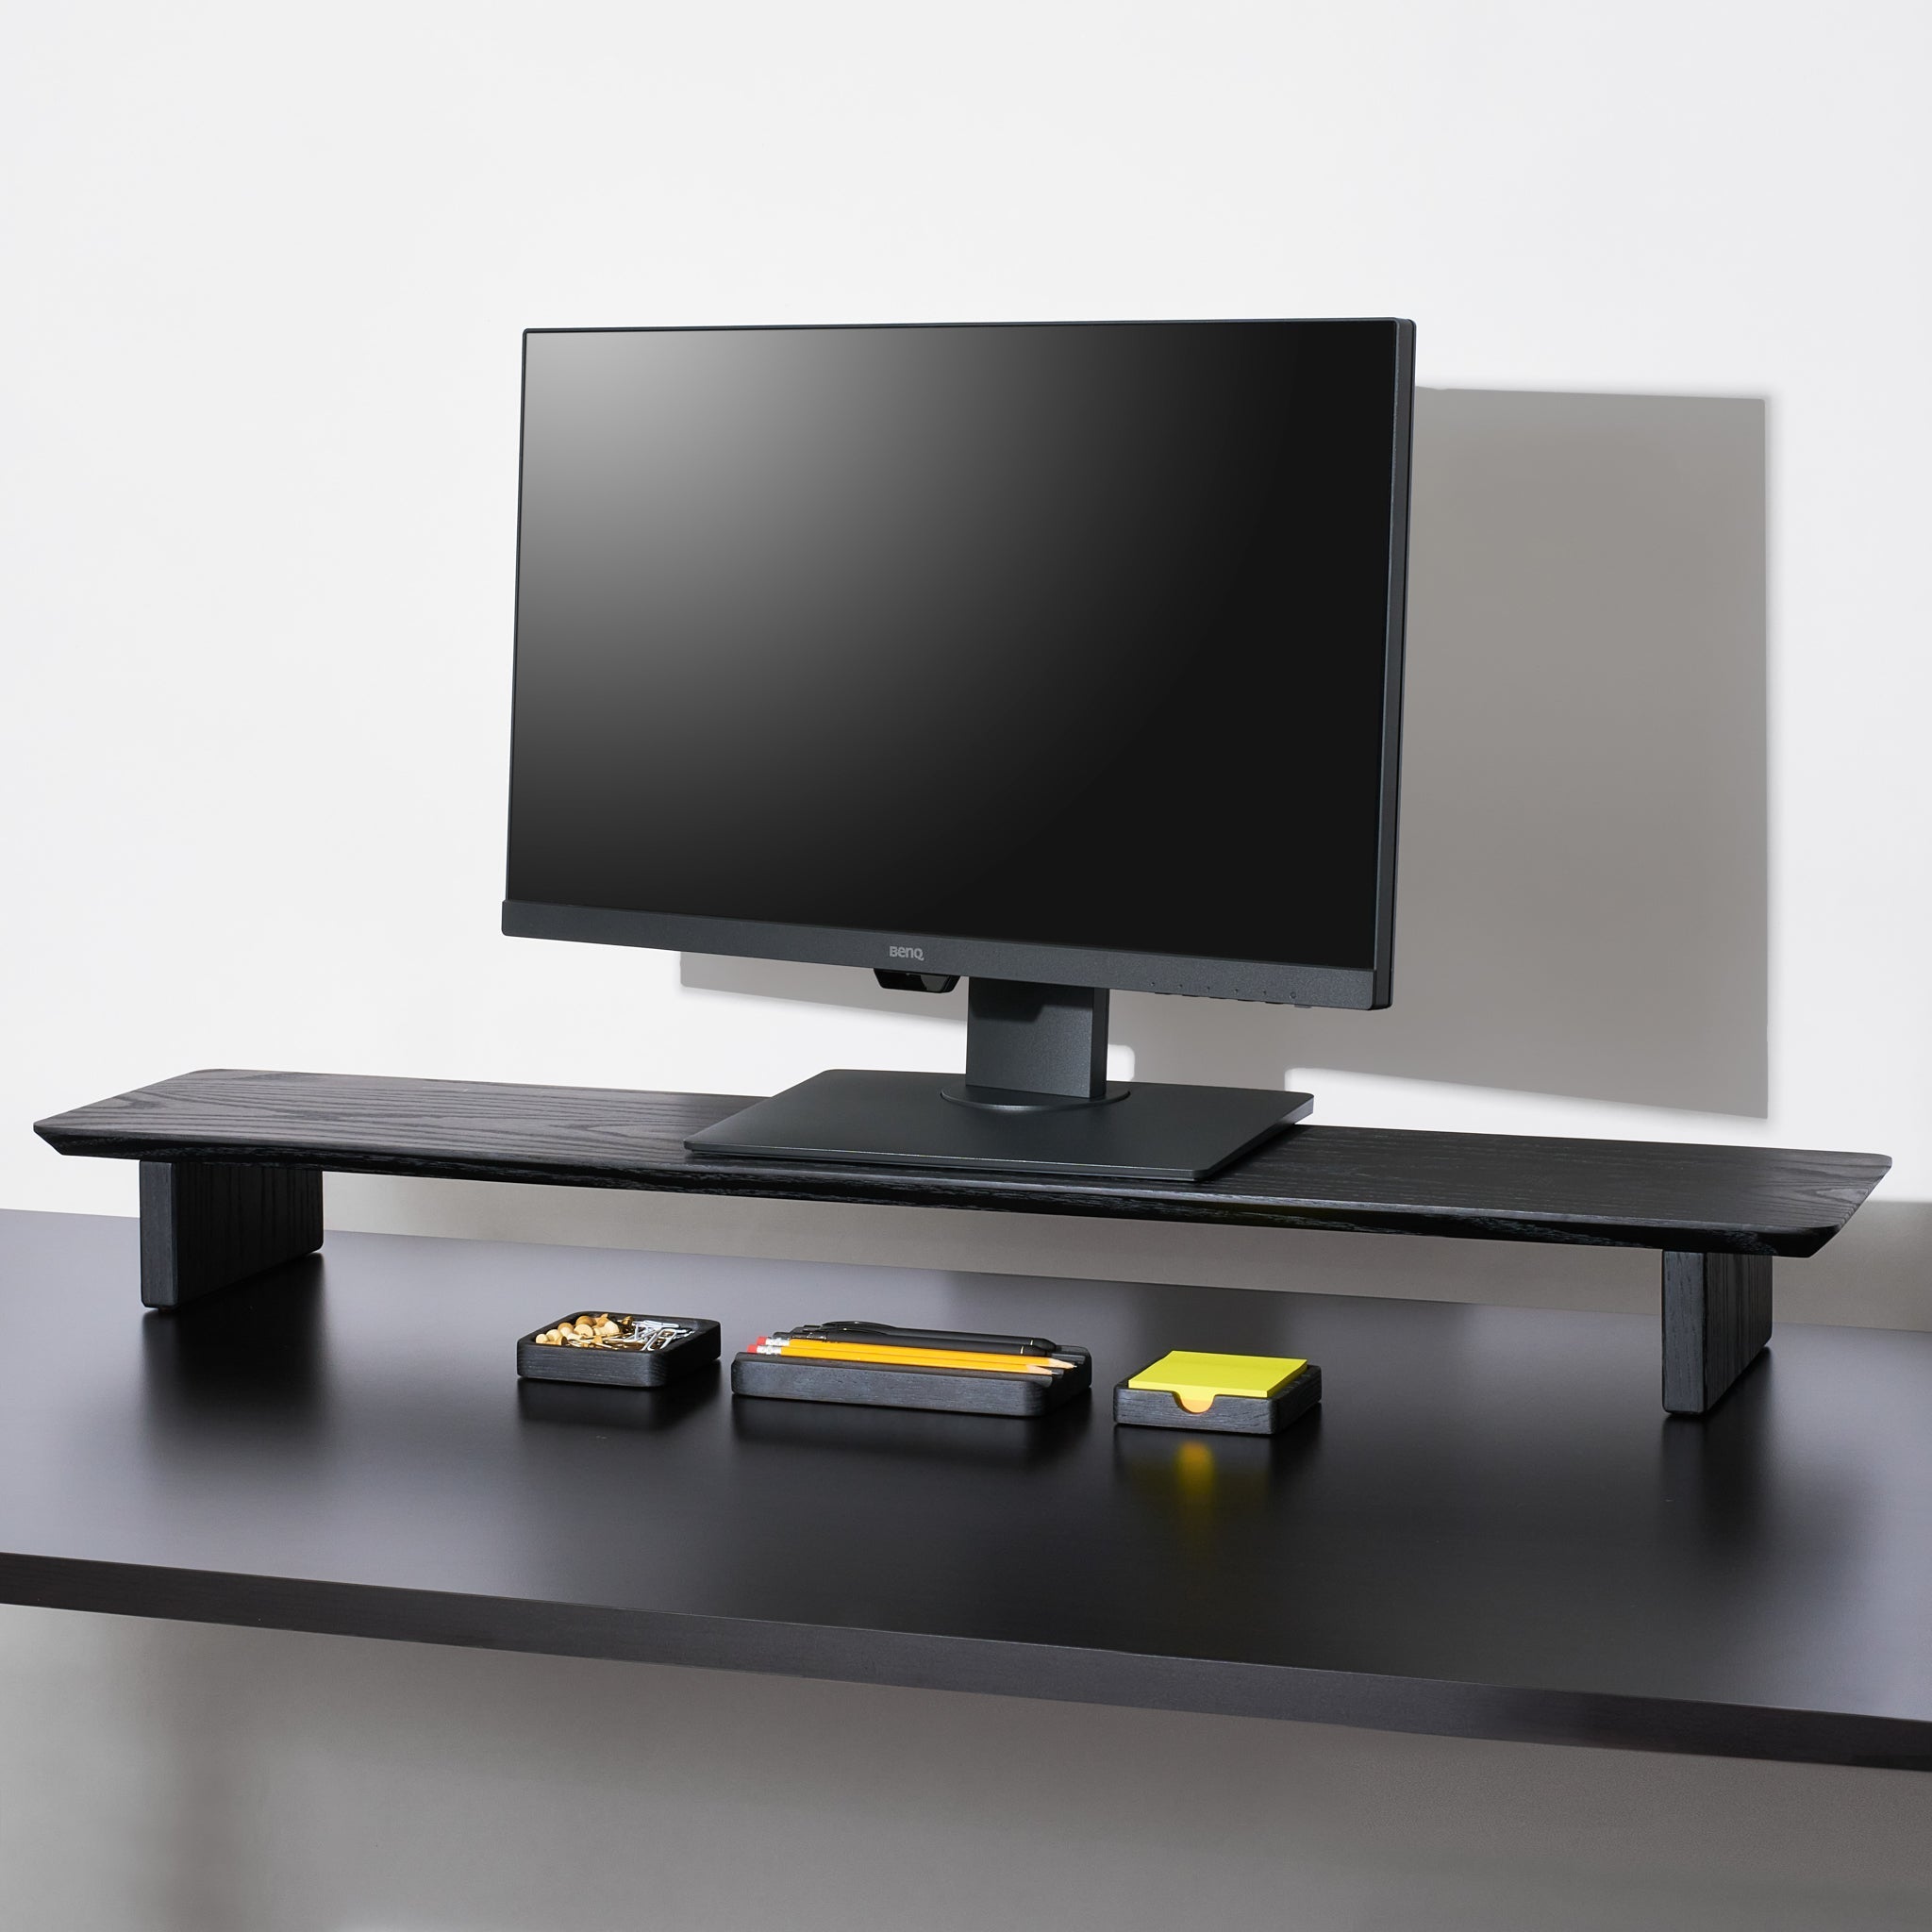 A large Black desk shelf with the essentials desk accessories for workspace organization